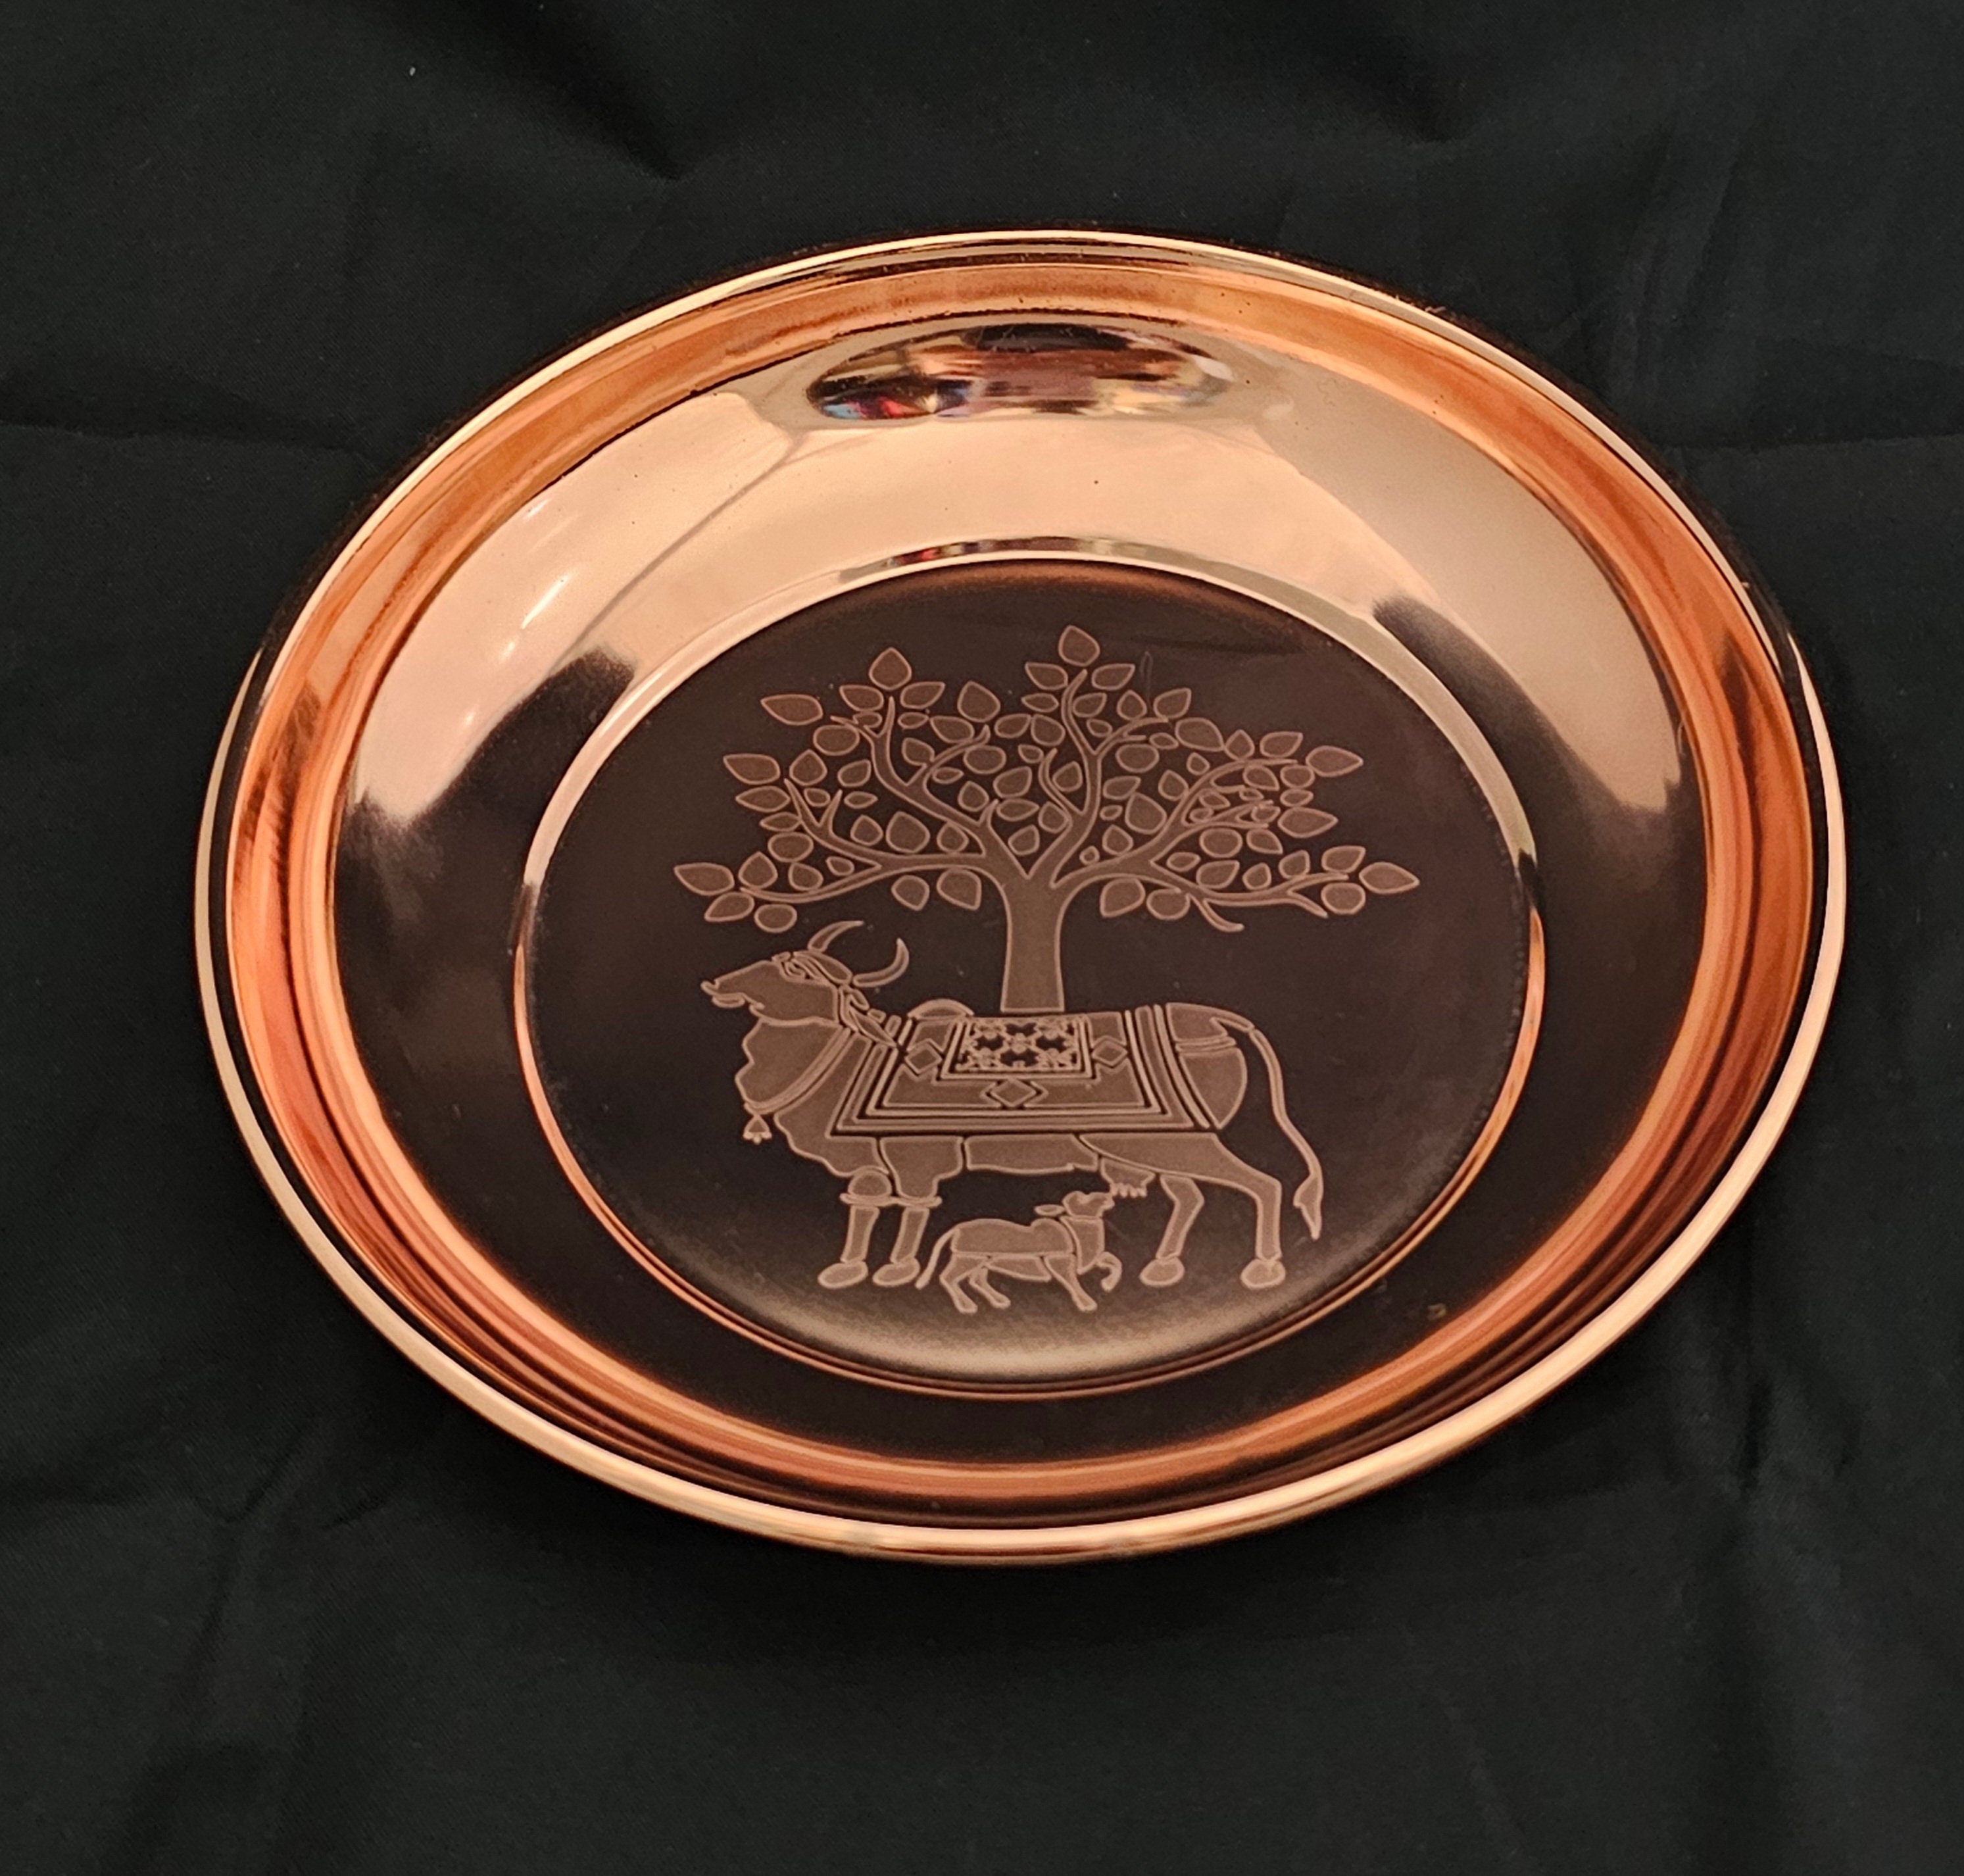 Khamadhenu Golden and Turkish Copper finished Plate - Housewarming Gift, Pooja Gift, Return Gift, Navarathri gift, Diwali Gift